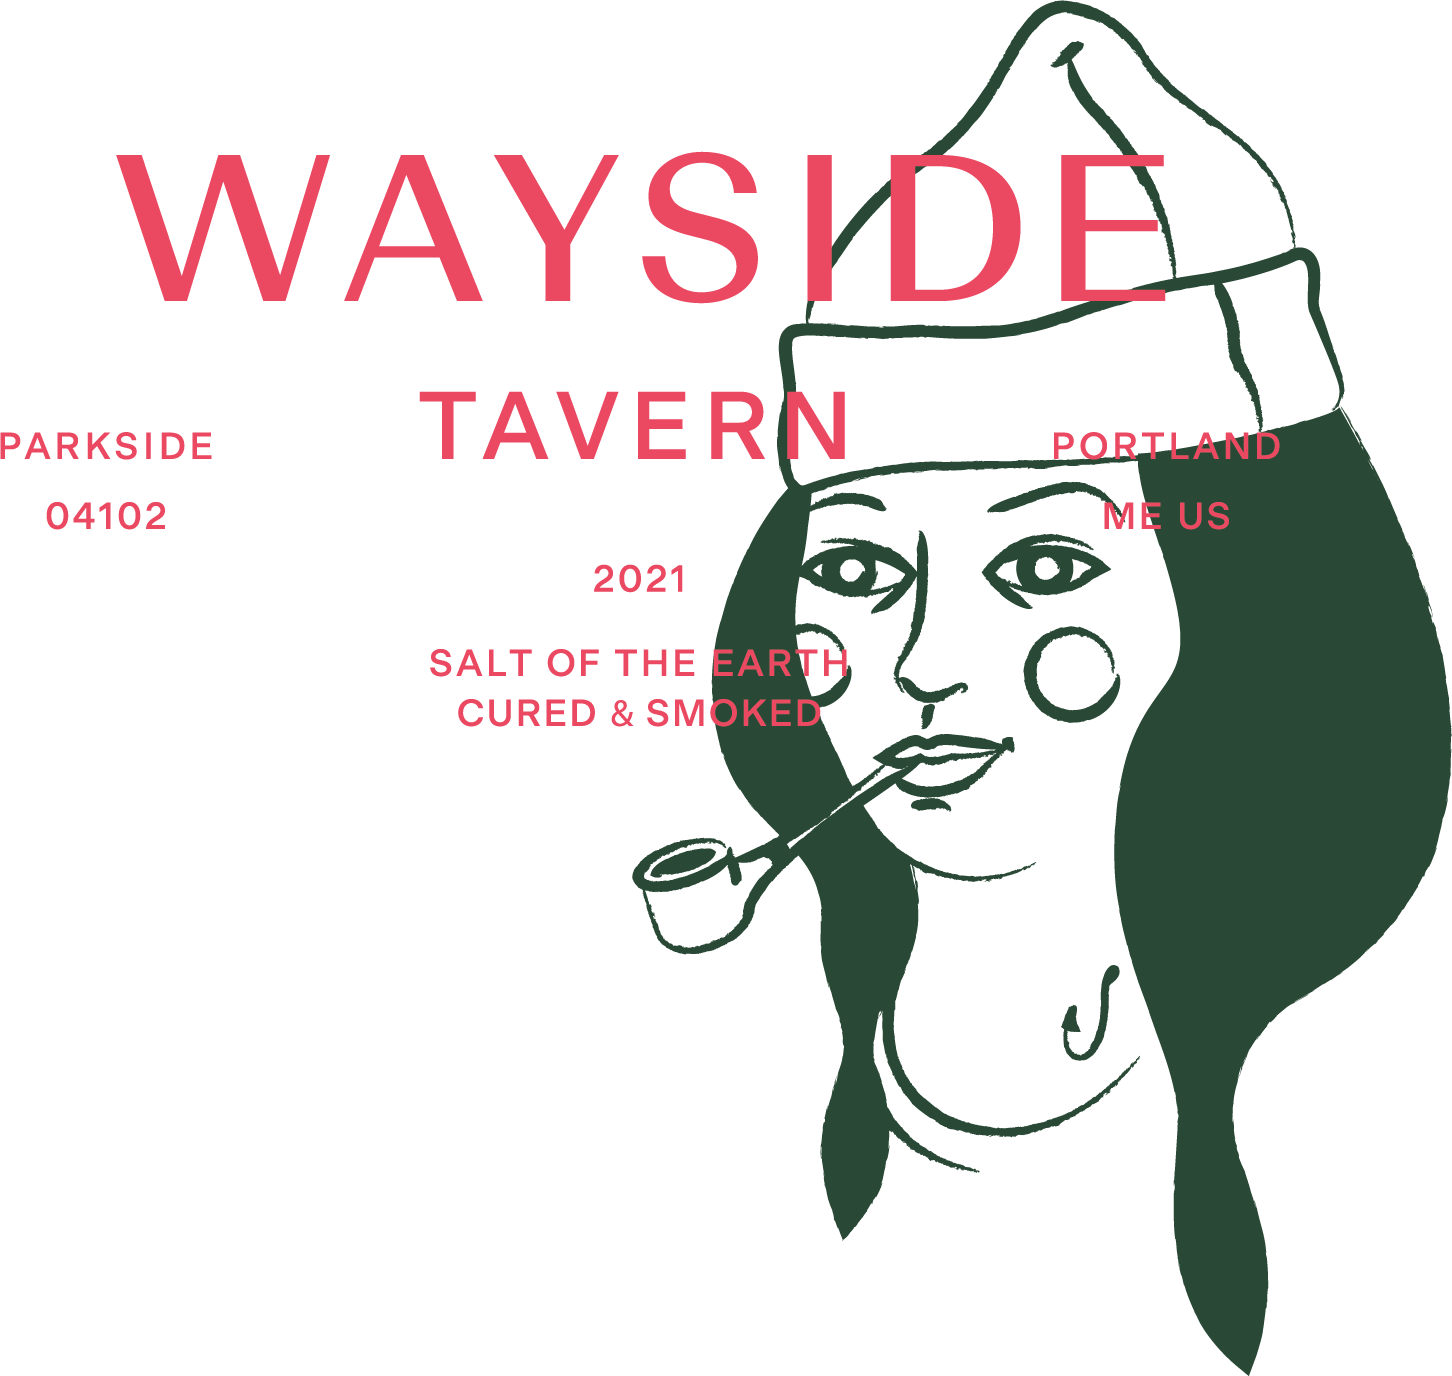 Wayside Tavern